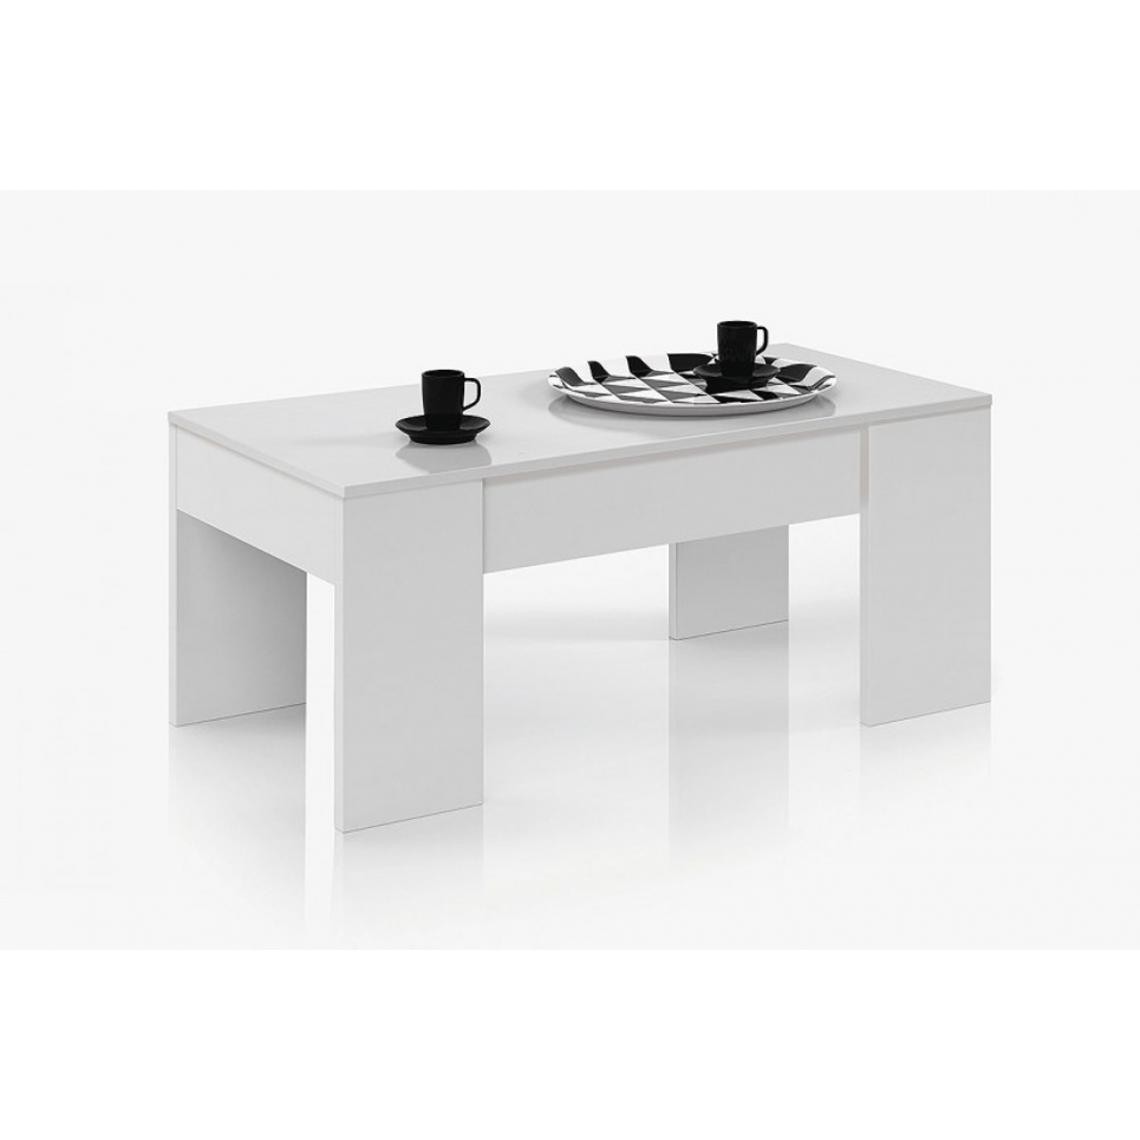 Pegane - Table Basse modulable coloris blanc artic - 45 x 100 x 50 cm - Tables basses